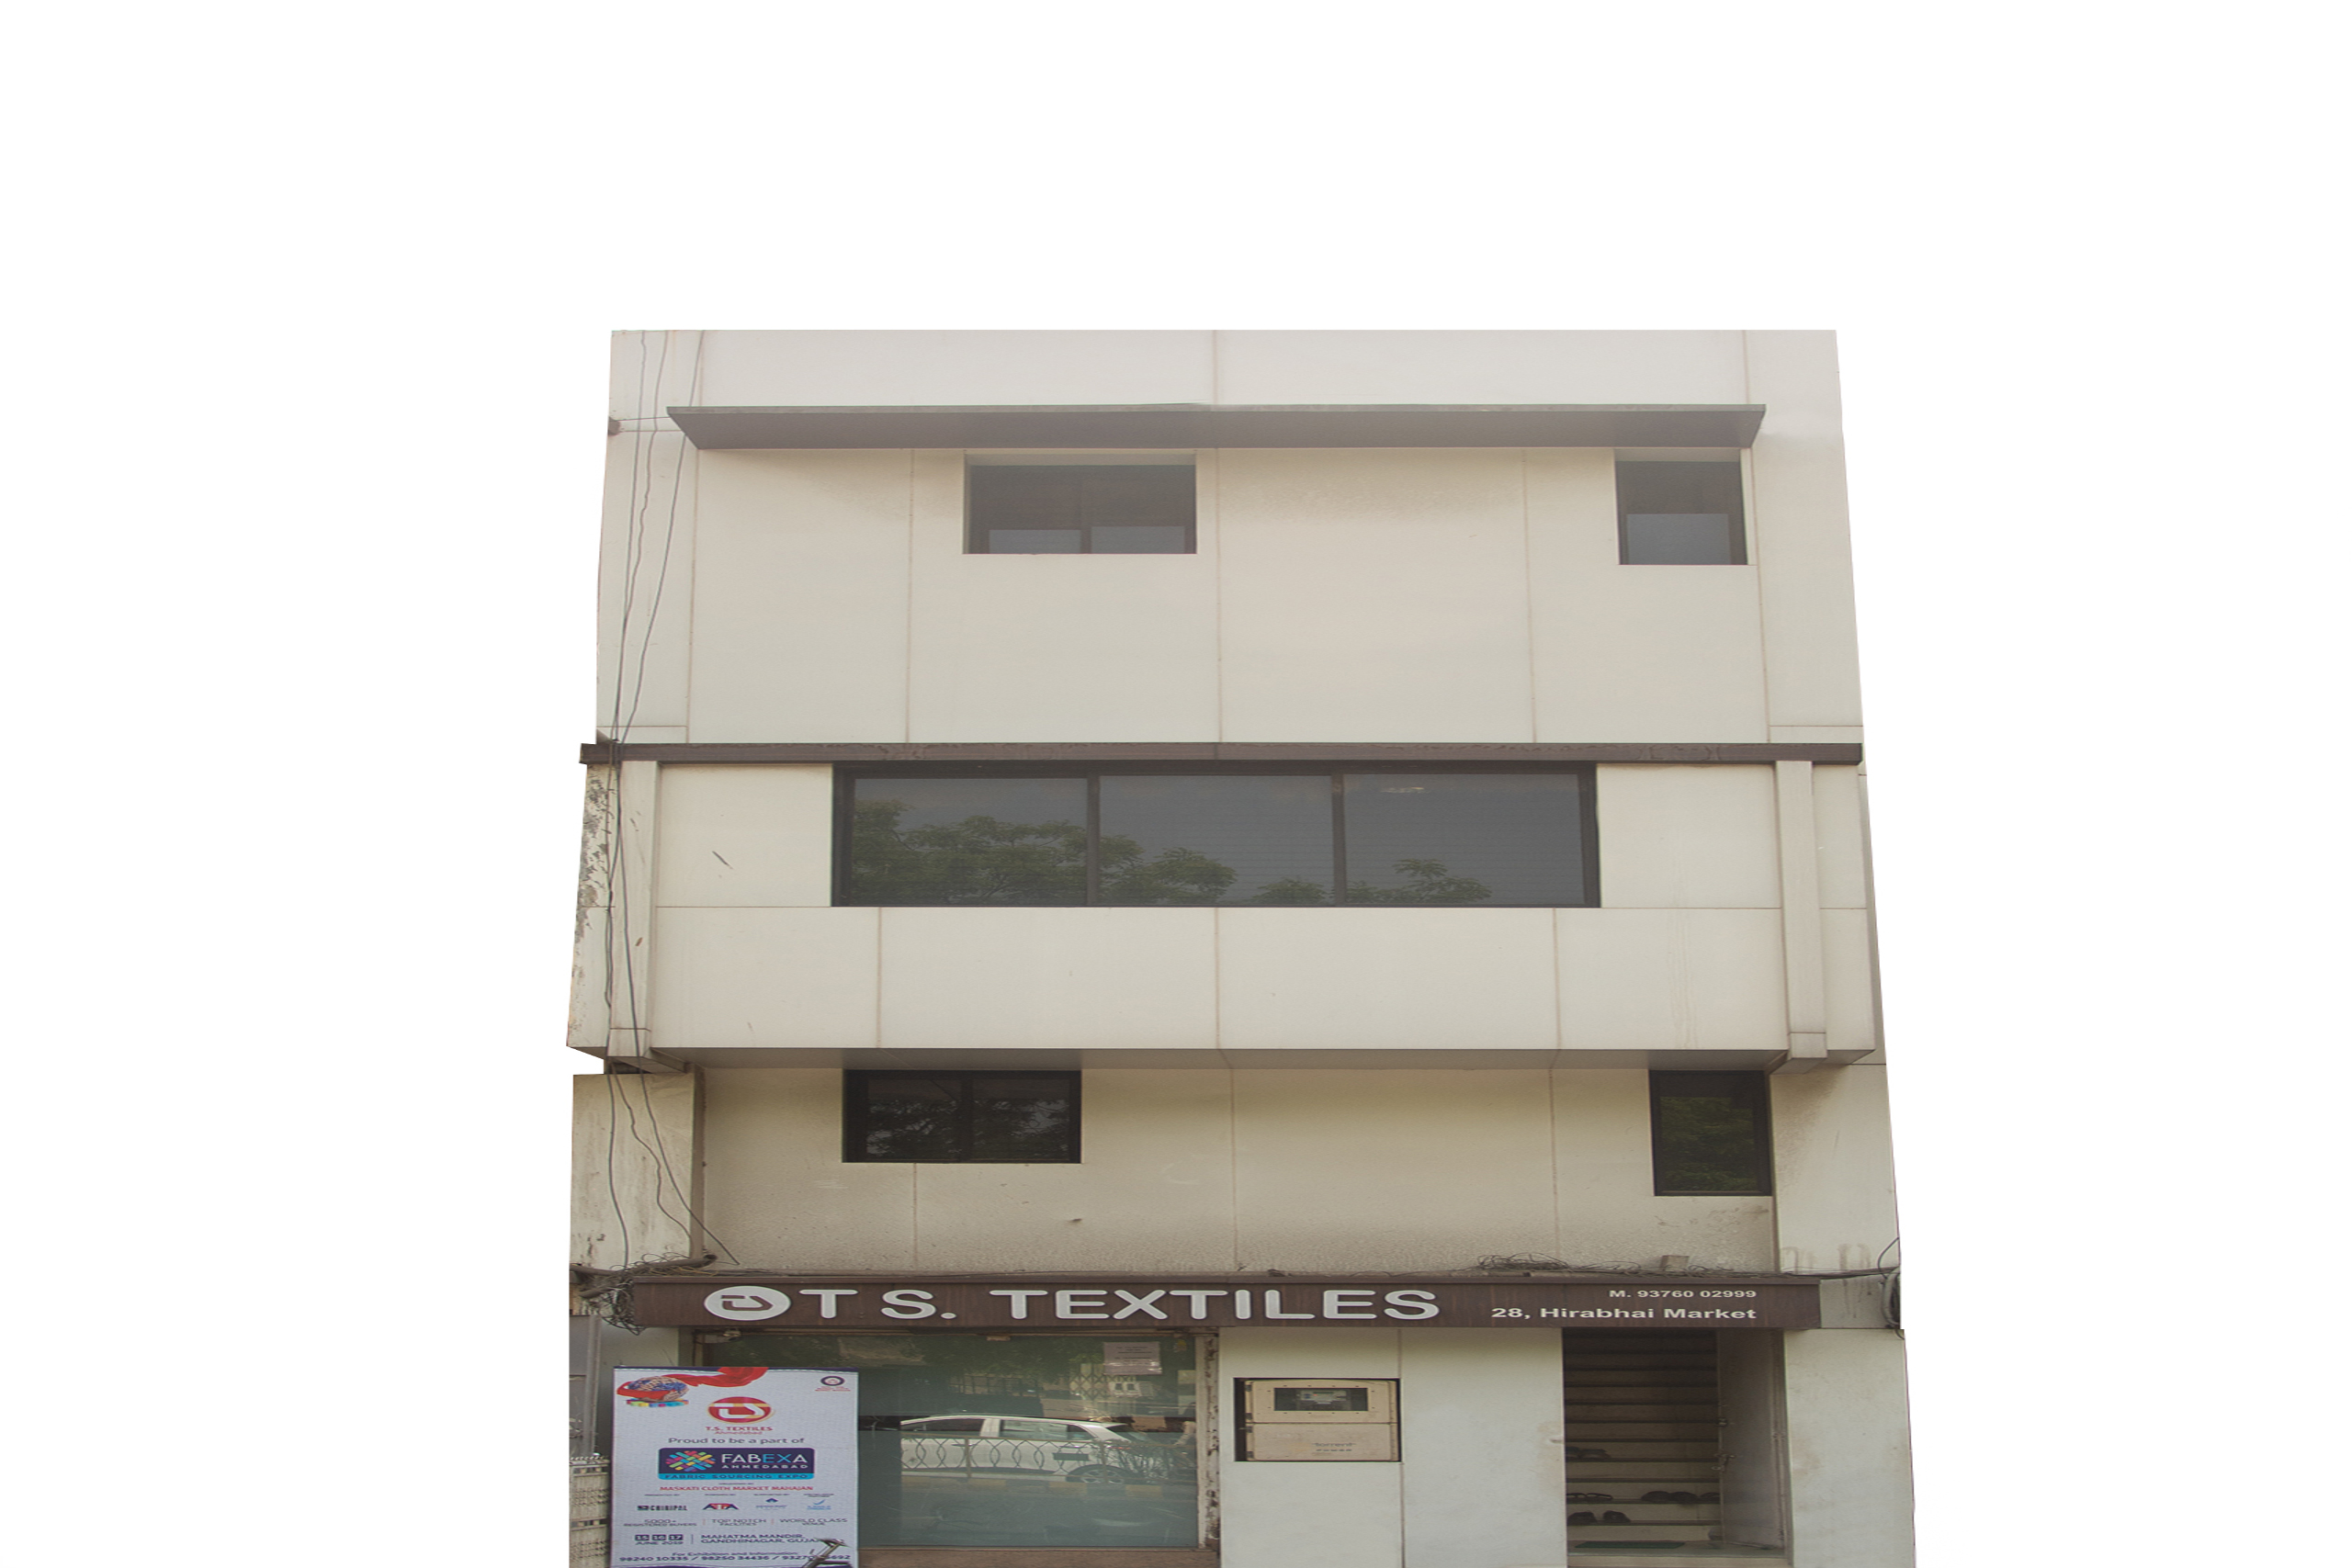 Textiles Company in India